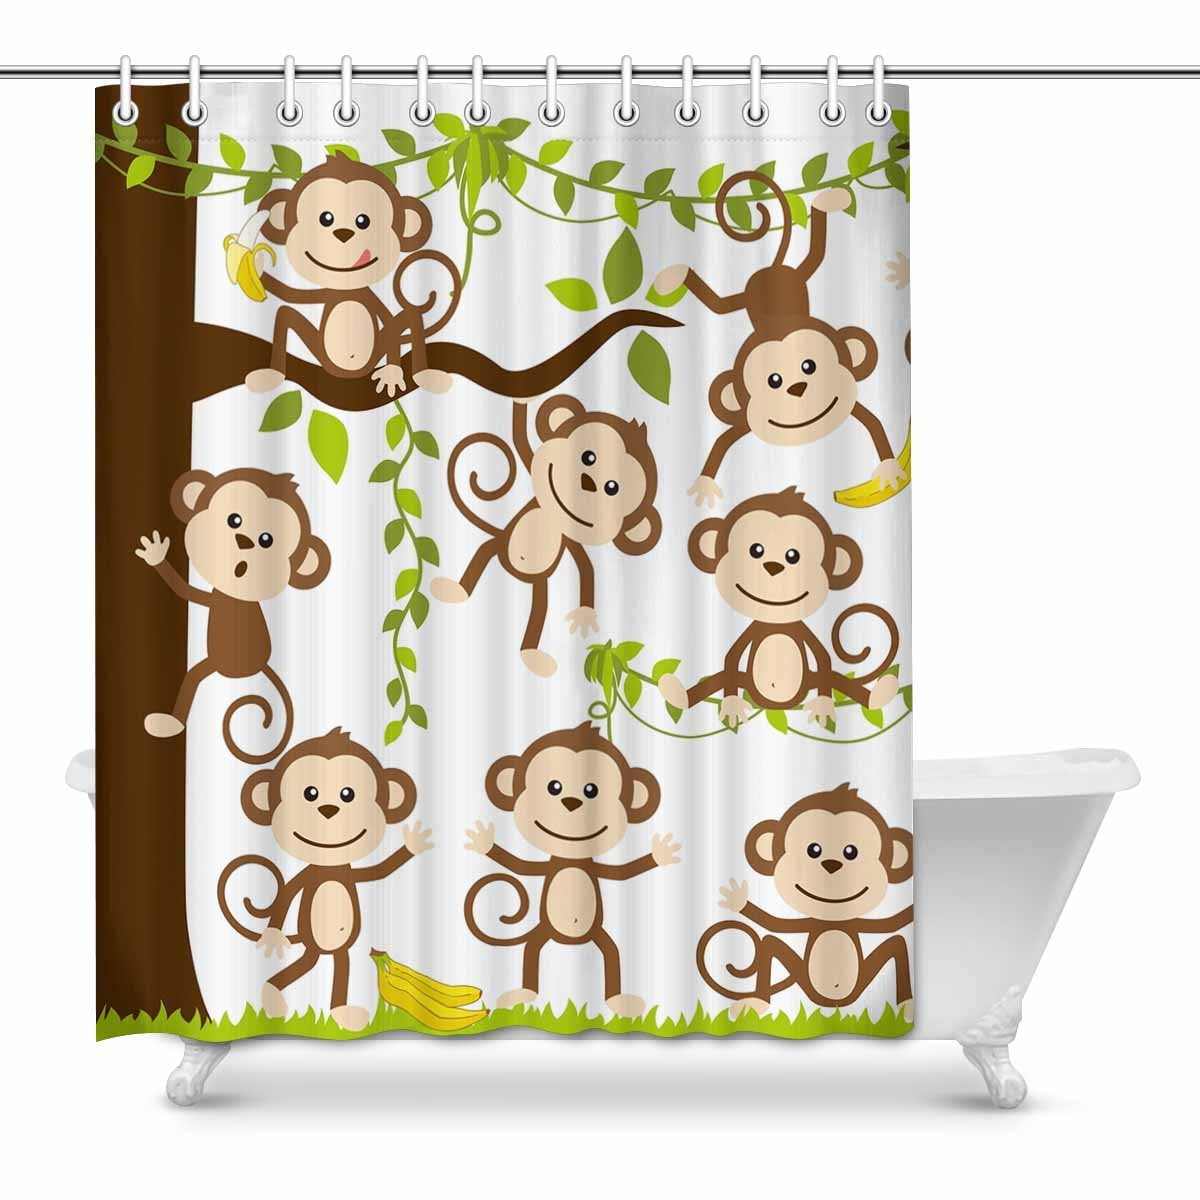 Monkey Hanging on a Vine Bathroom Shower Curtain Hook Bath Mat Waterproof Fabric 